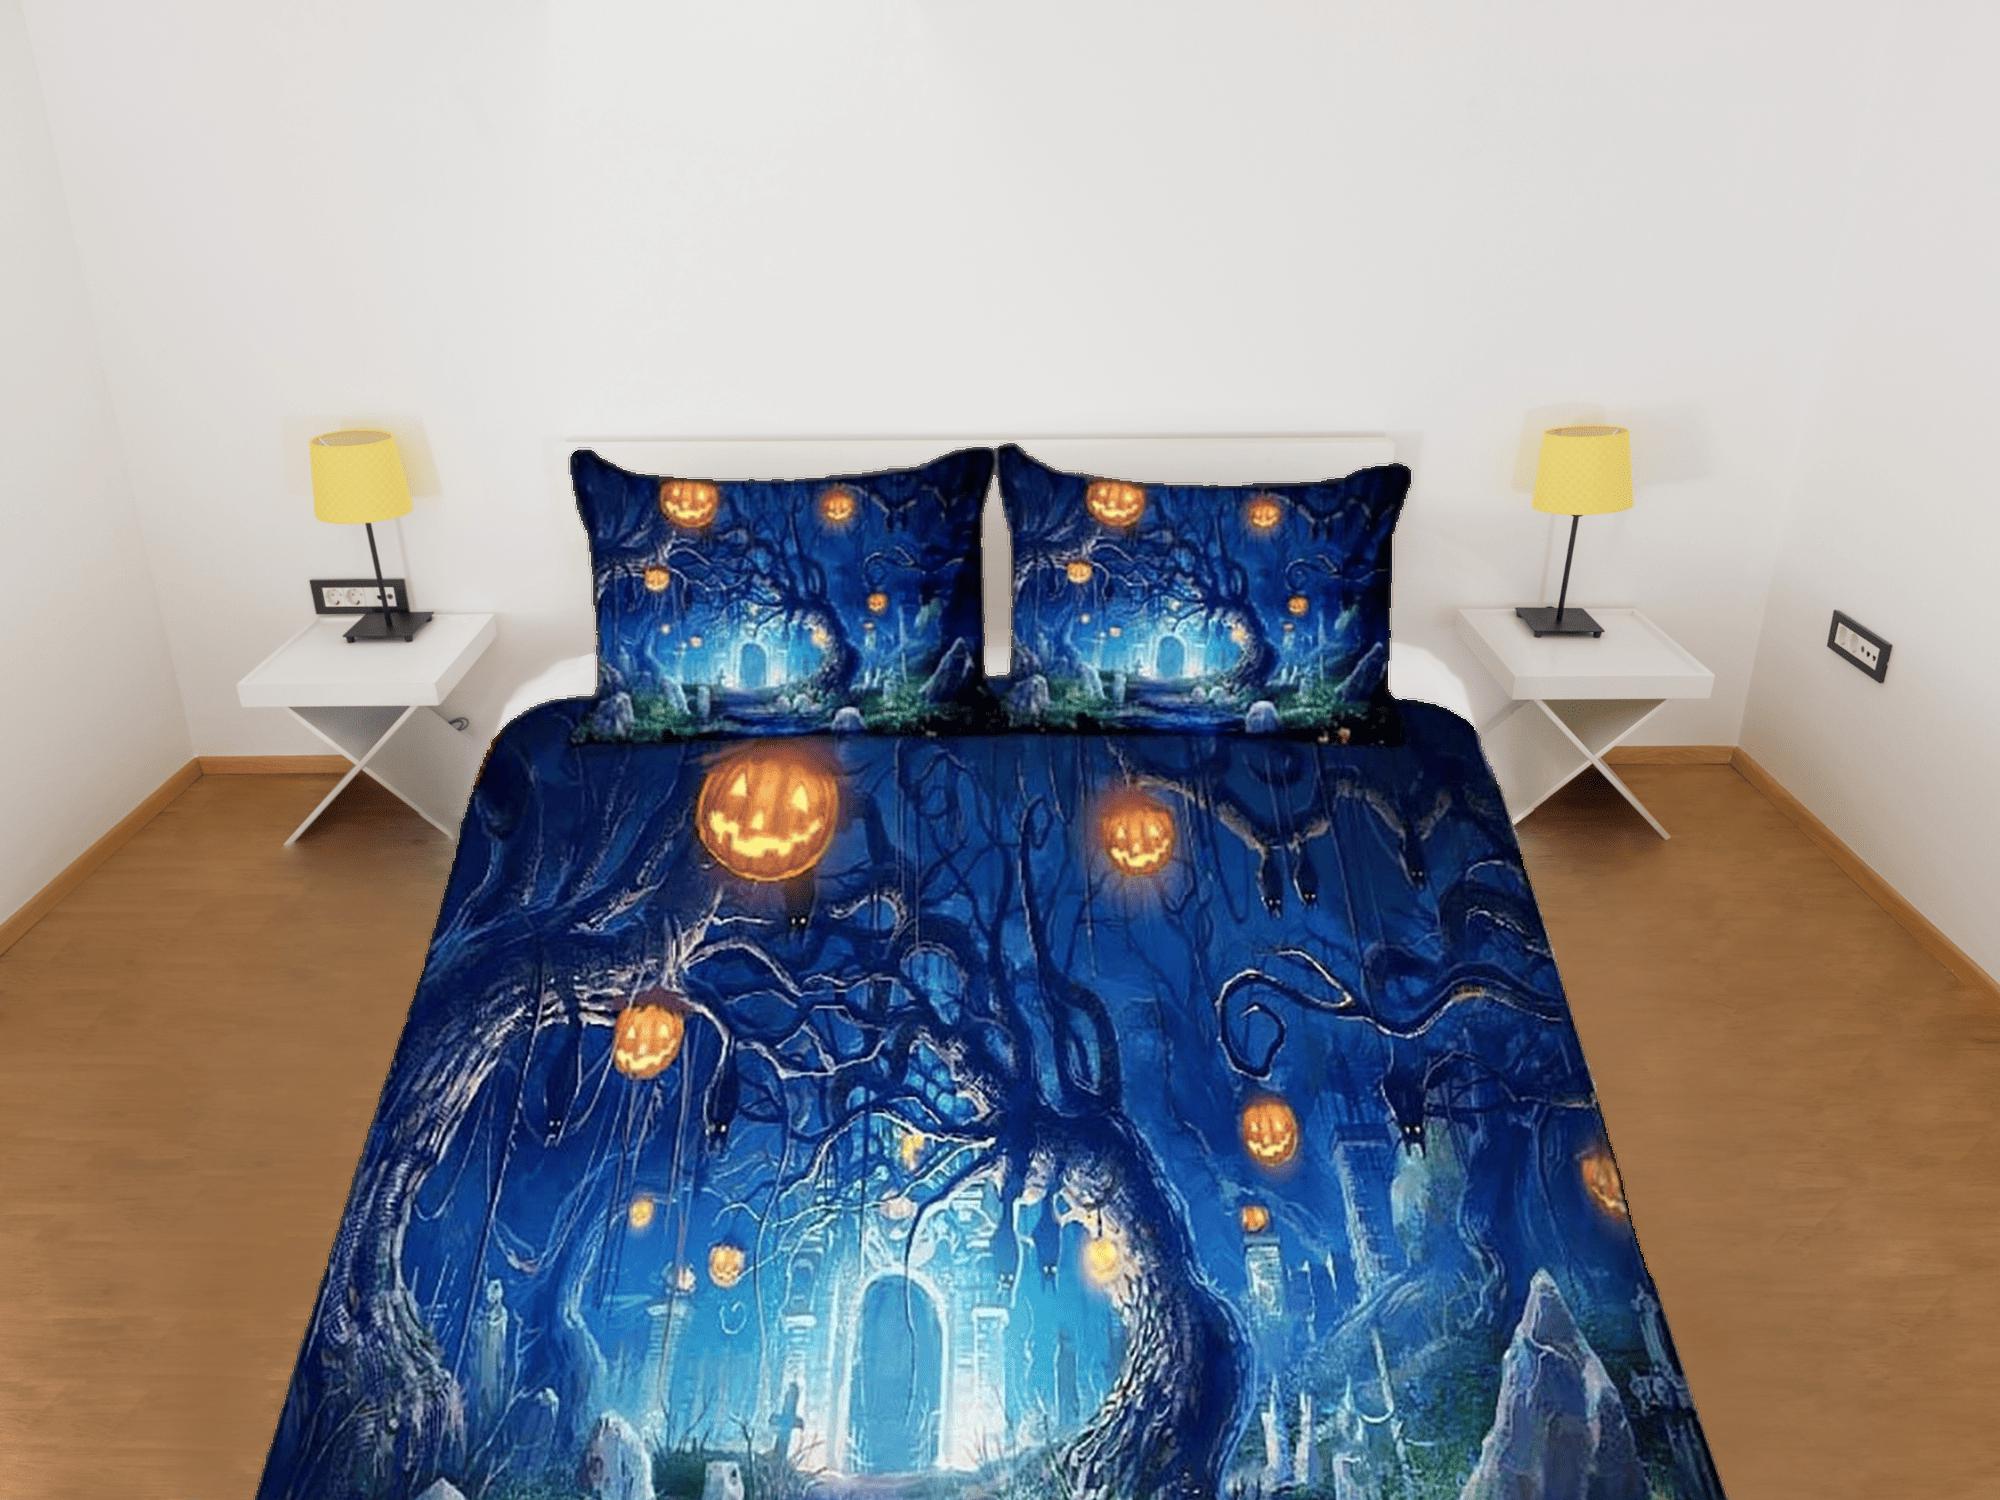 daintyduvet Pumpkin lanterns mystical forest halloween bedding & pillowcase, gothic duvet cover, dorm bedding, goth decor toddler bedding halloween gift